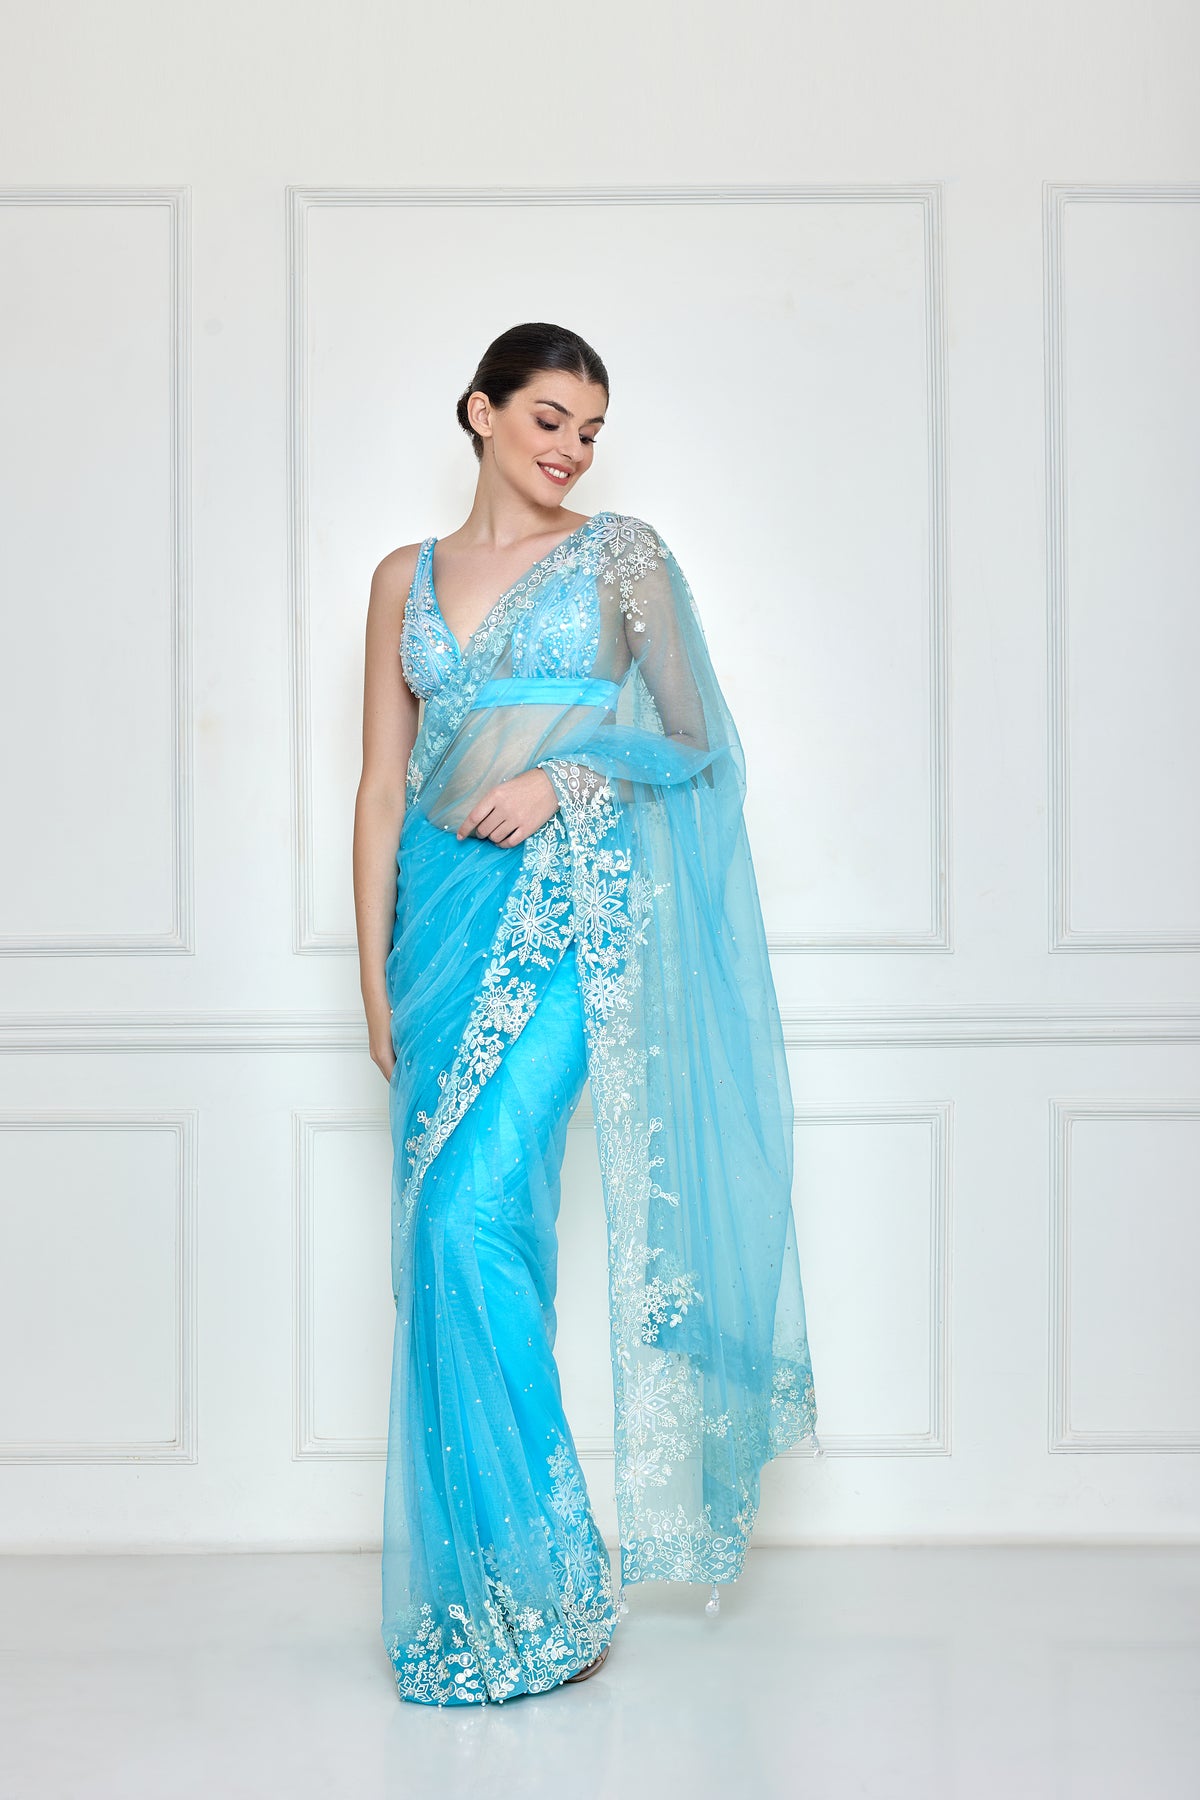 Vivid sky blue net sari